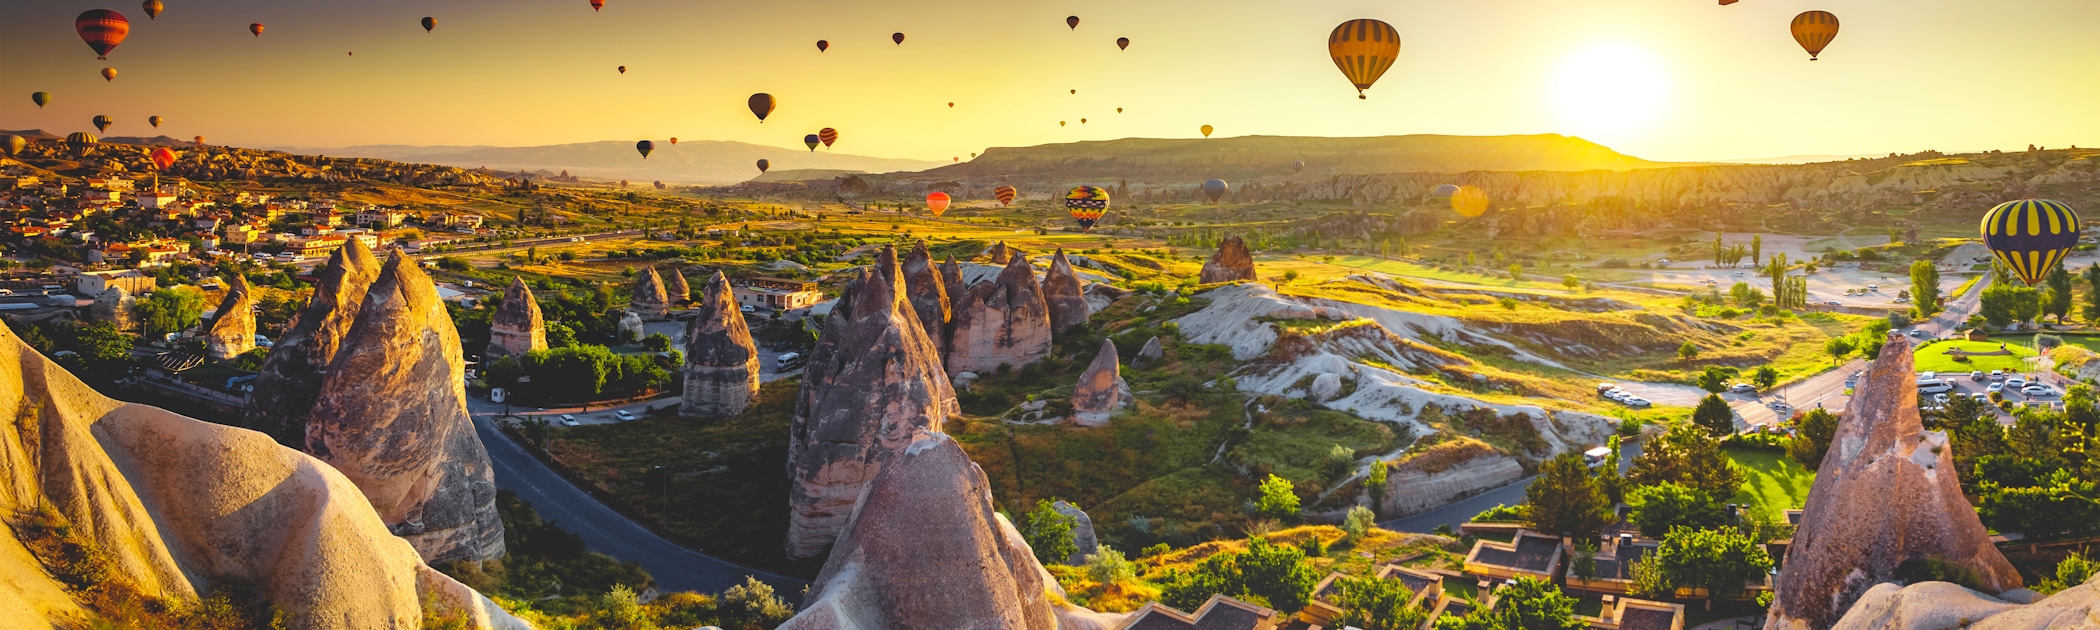 Hot air balloon rides in Cappadocia  musement